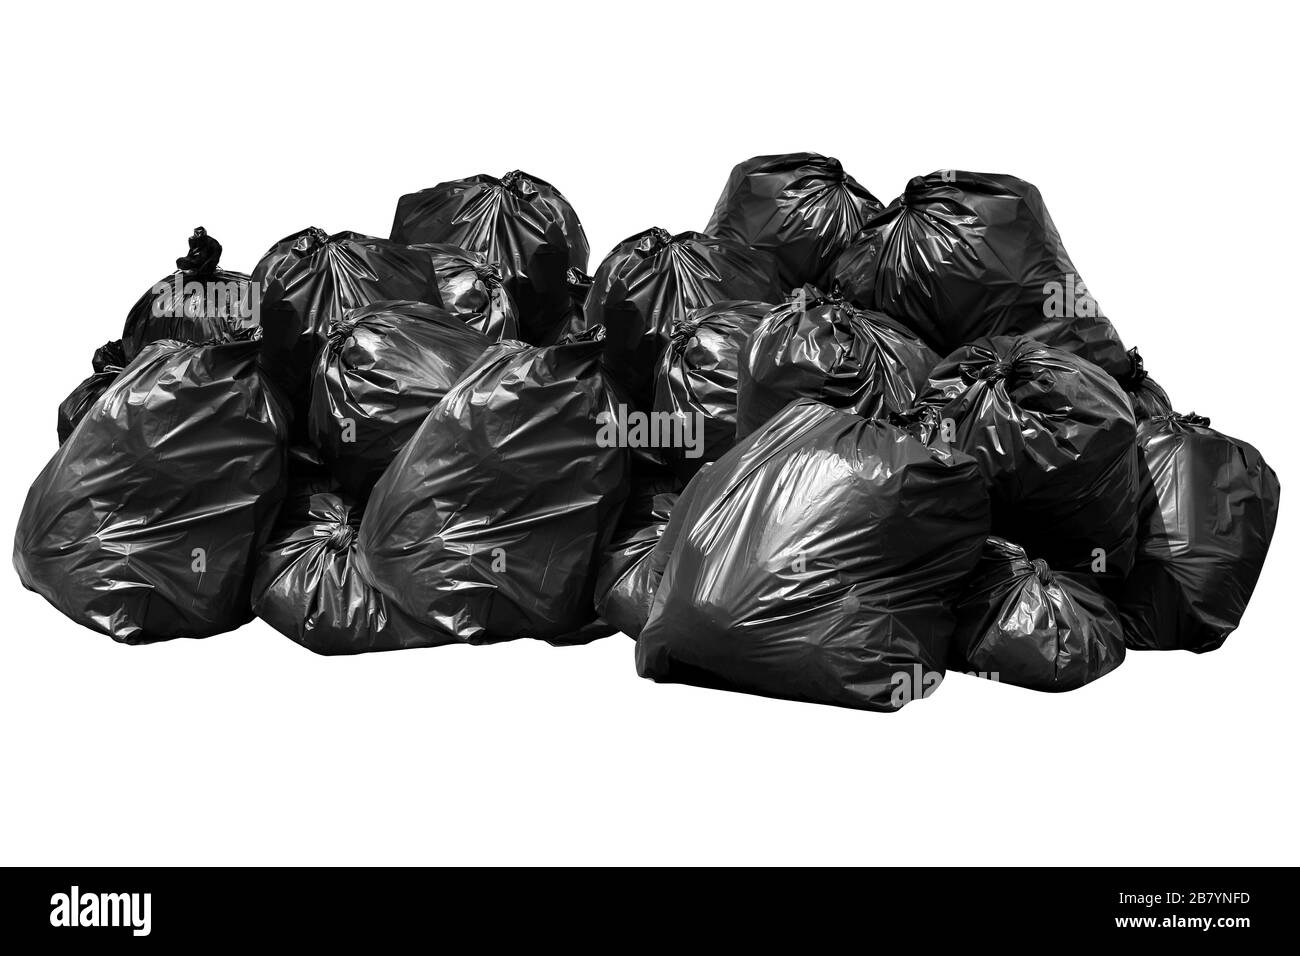 bin bag garbage, Bin,Trash, Garbage, Rubbish, Plastic Bags pile ...